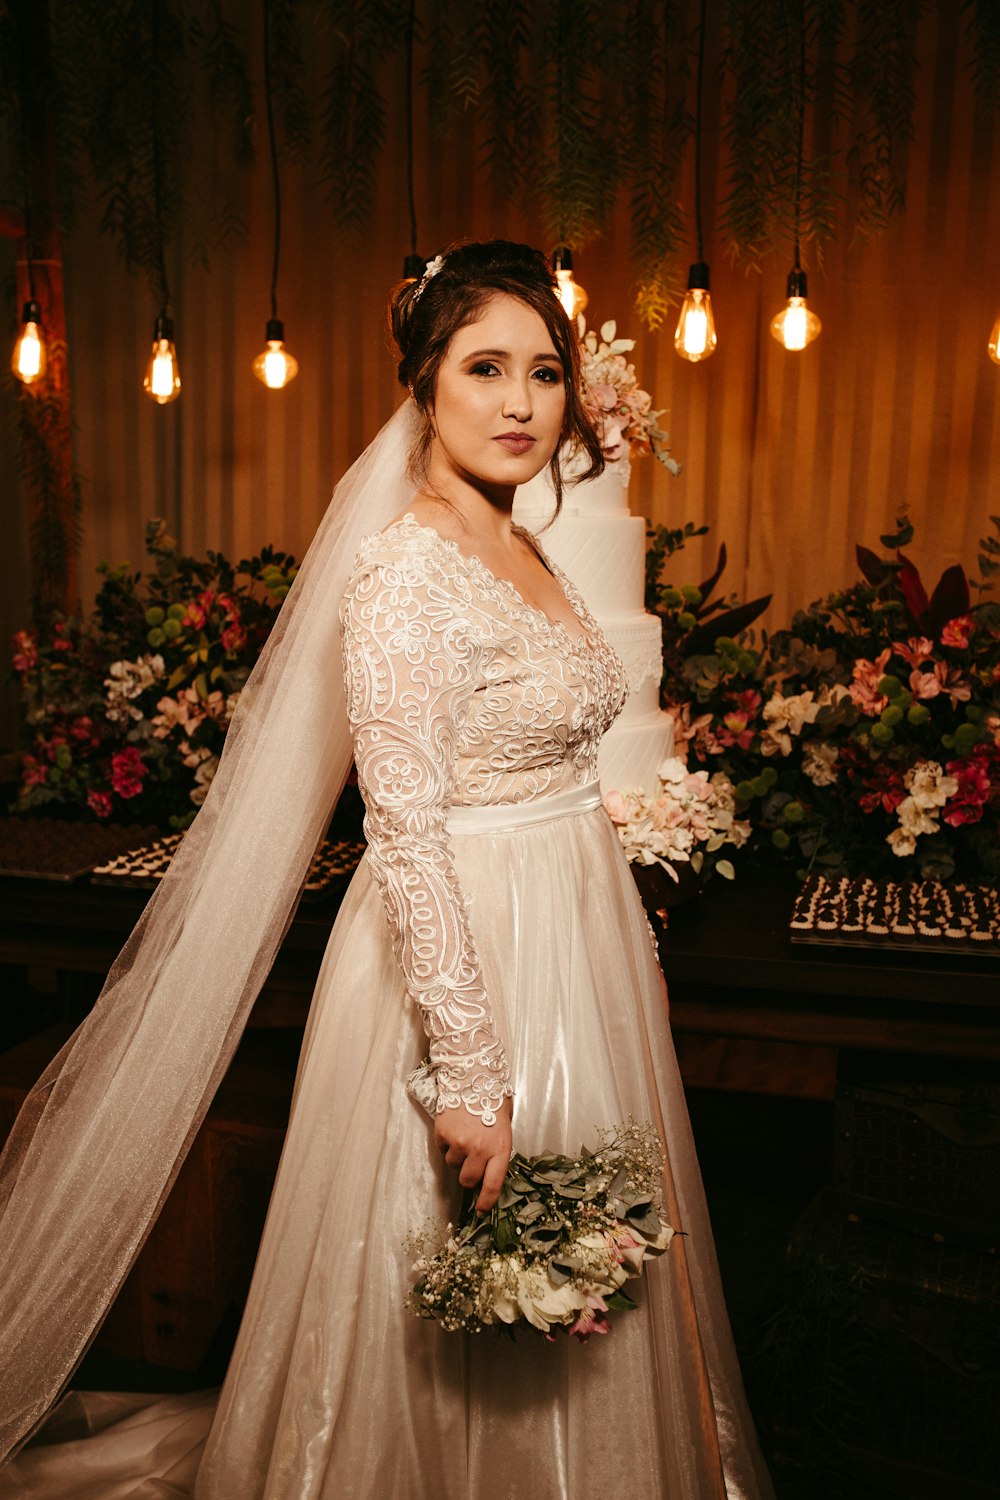 a woman in a wedding dress